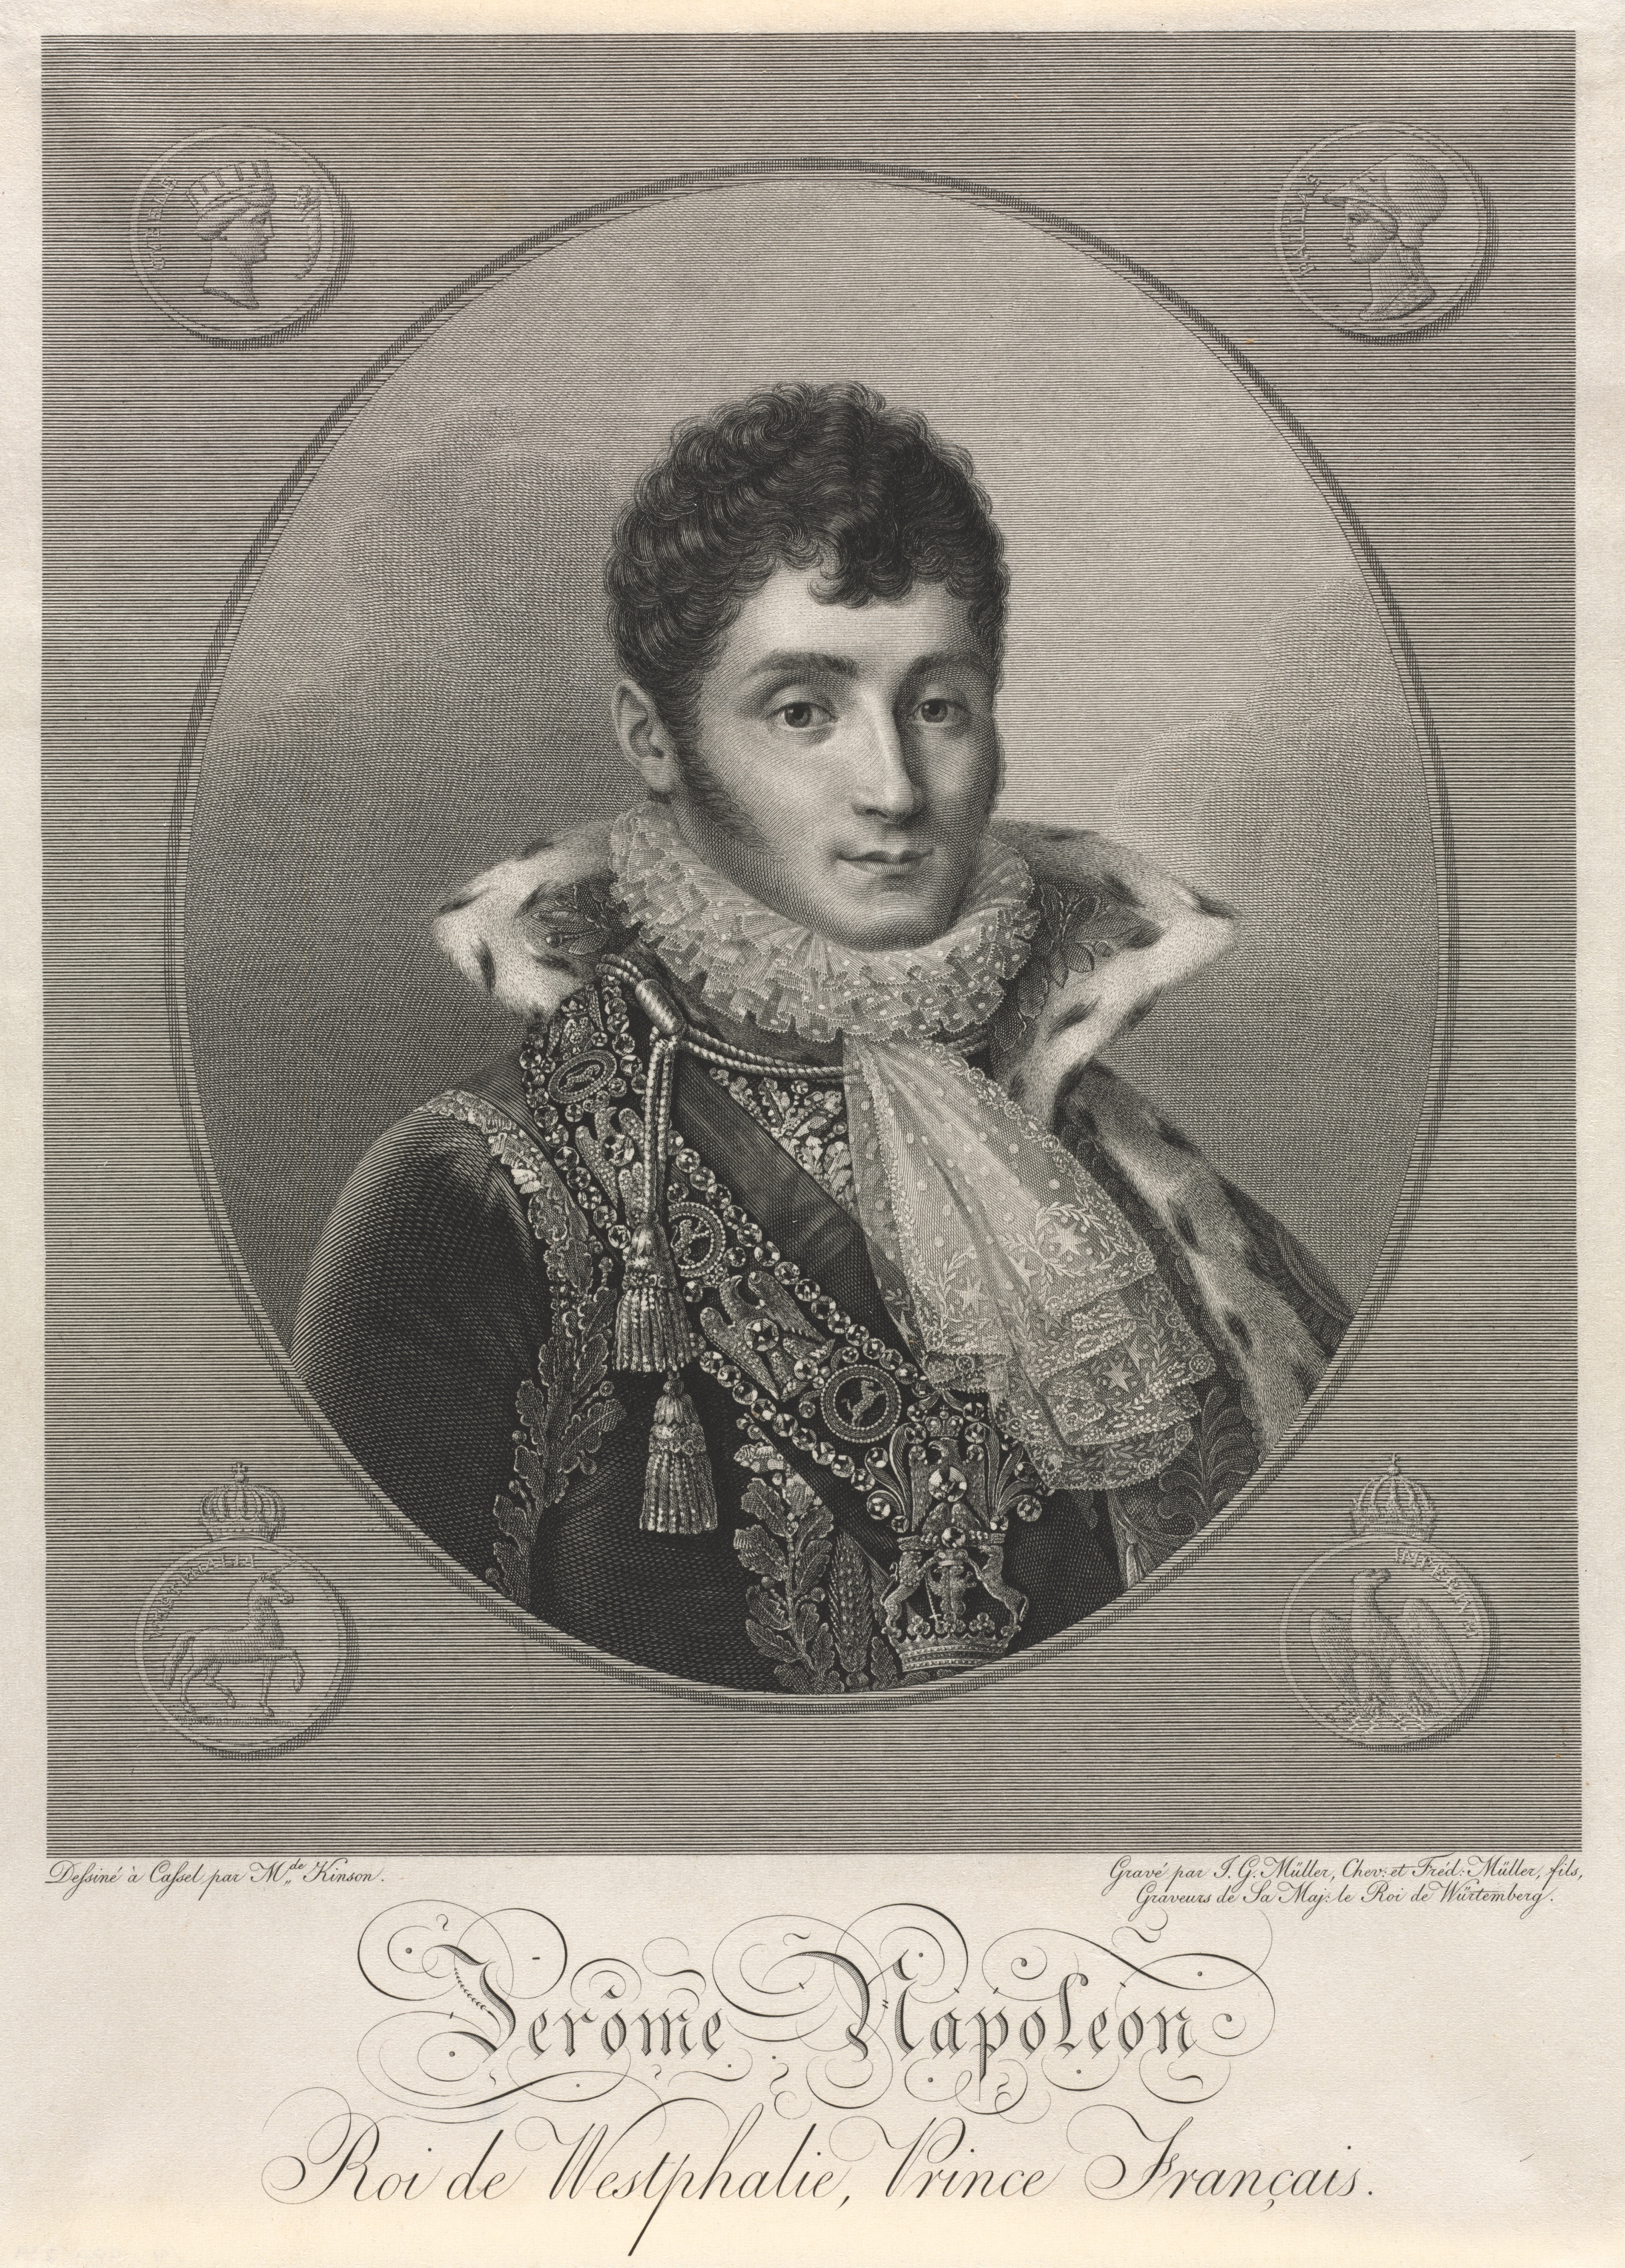 Jerome Napoleon, King of Westphalia, French Prince